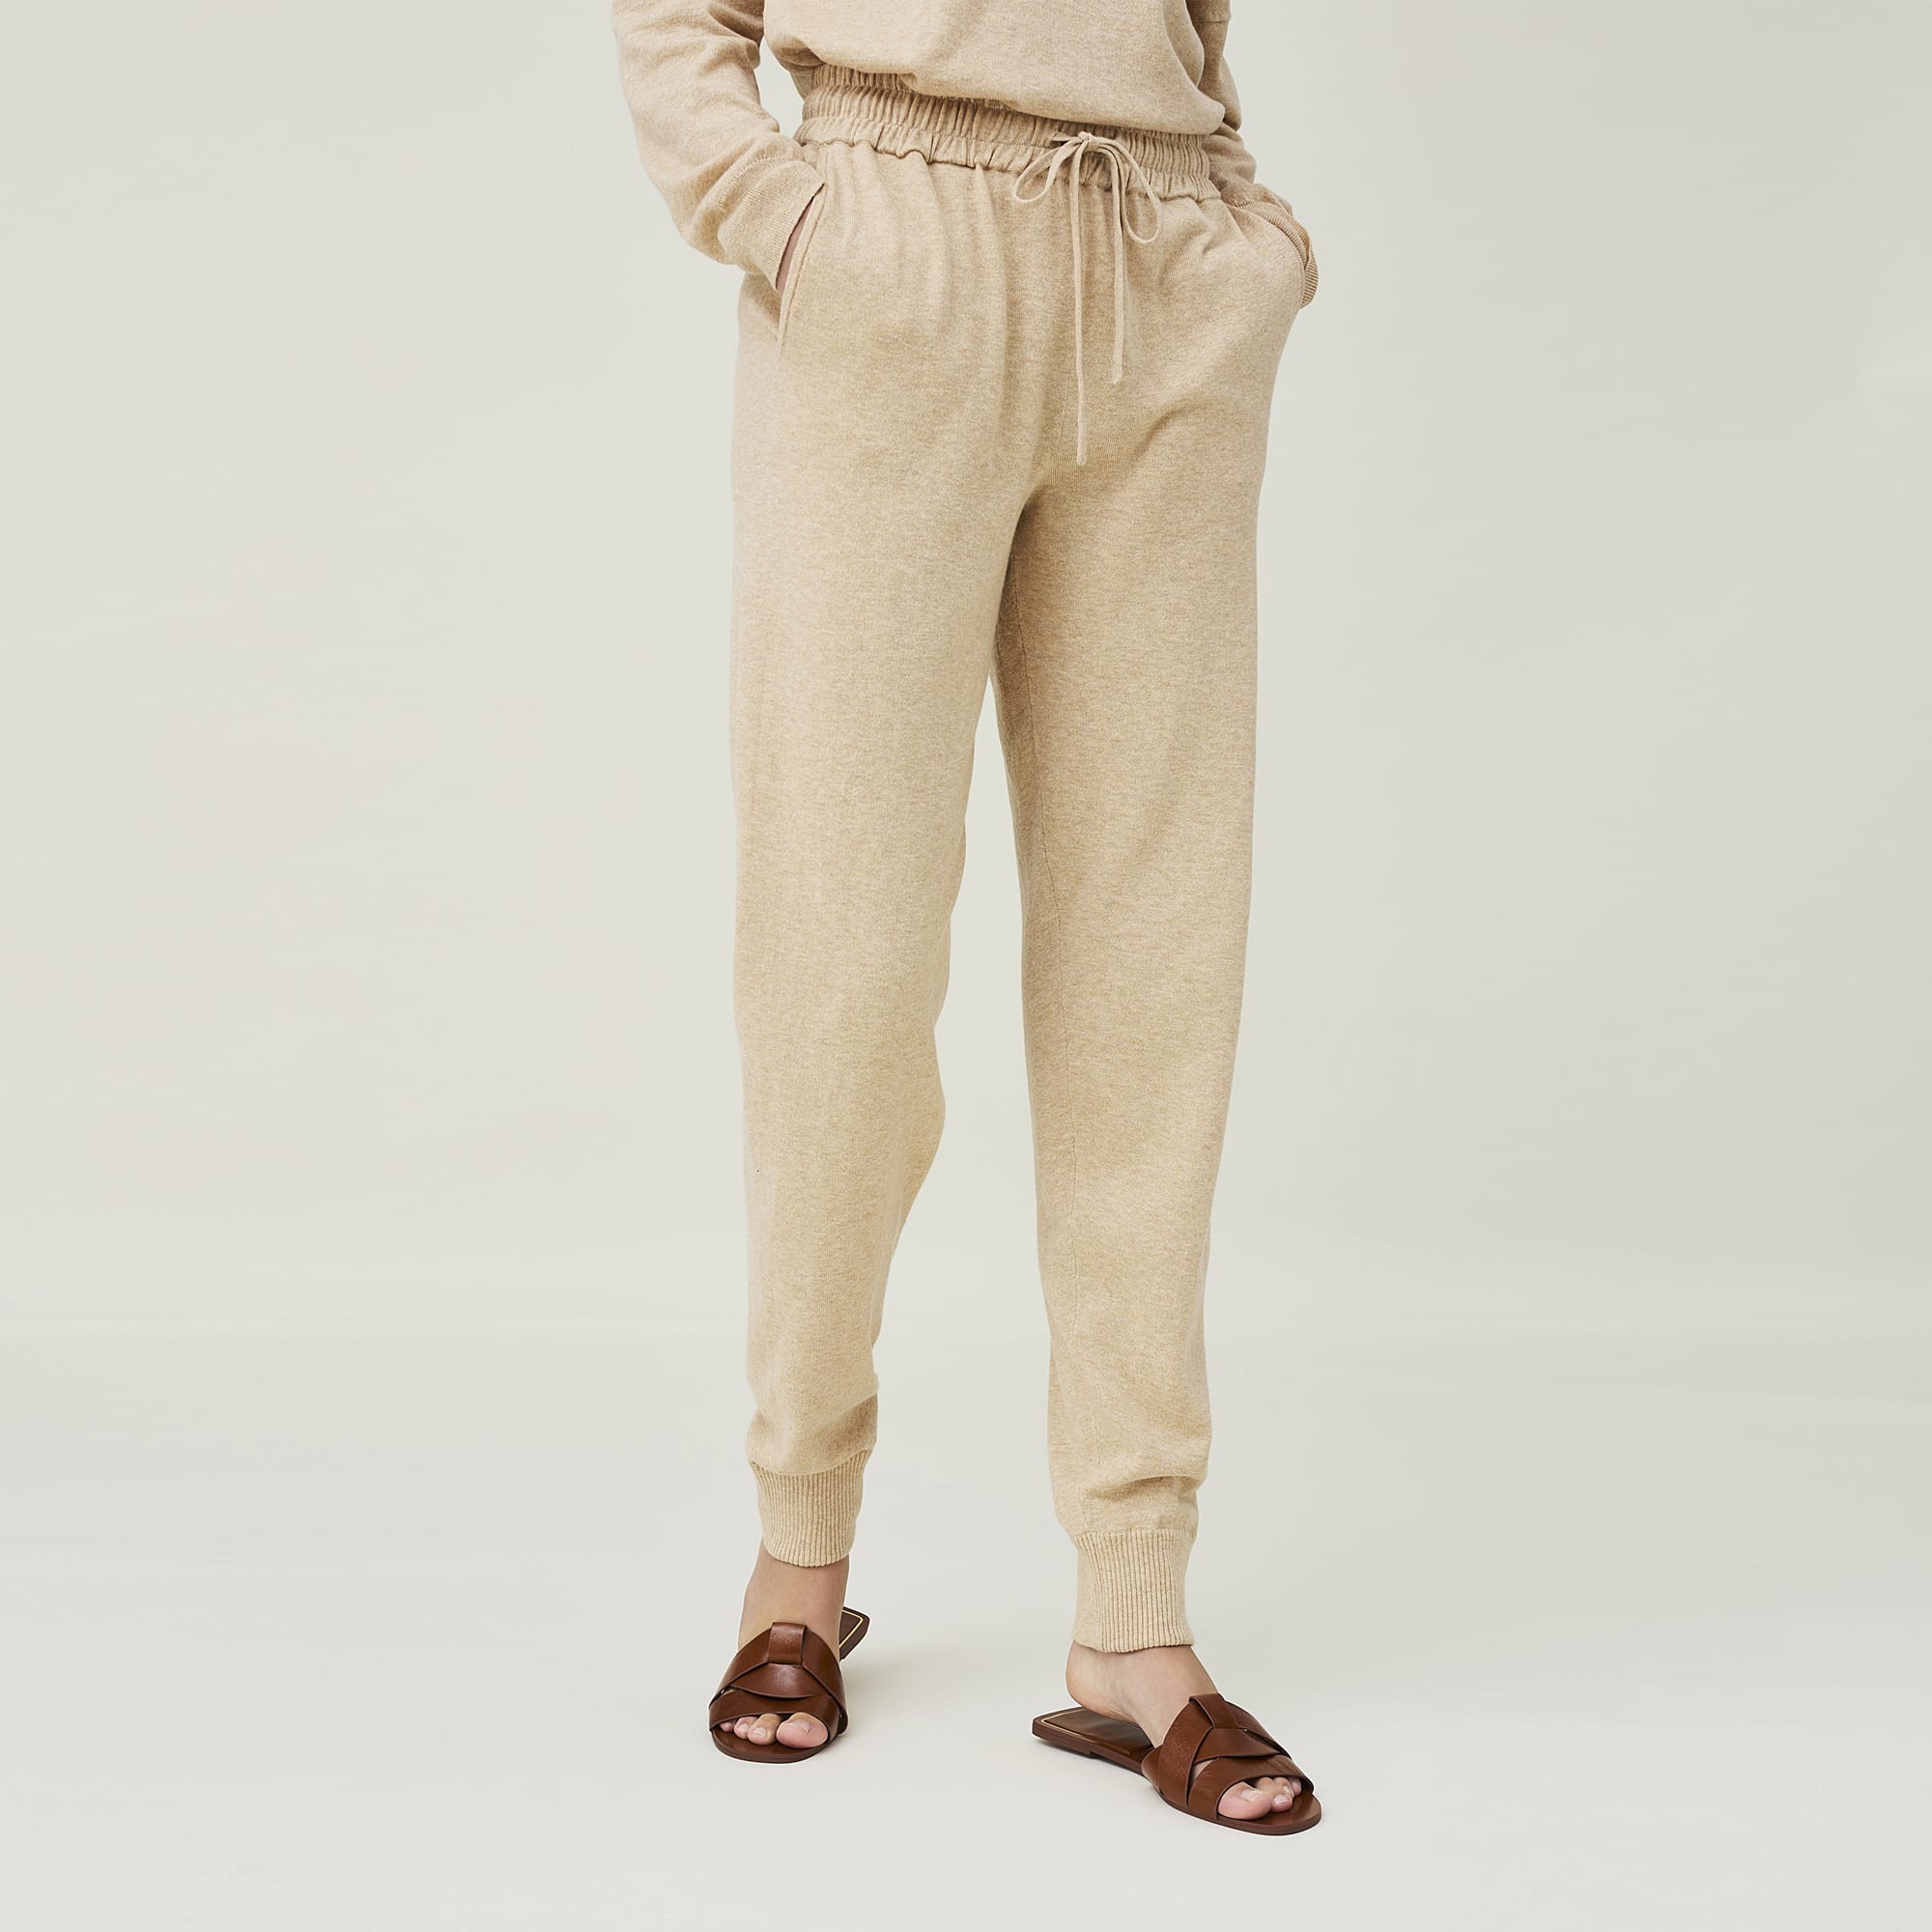 Elyssa Organic Cotton/lyocell Knitted Pants, light beige melange